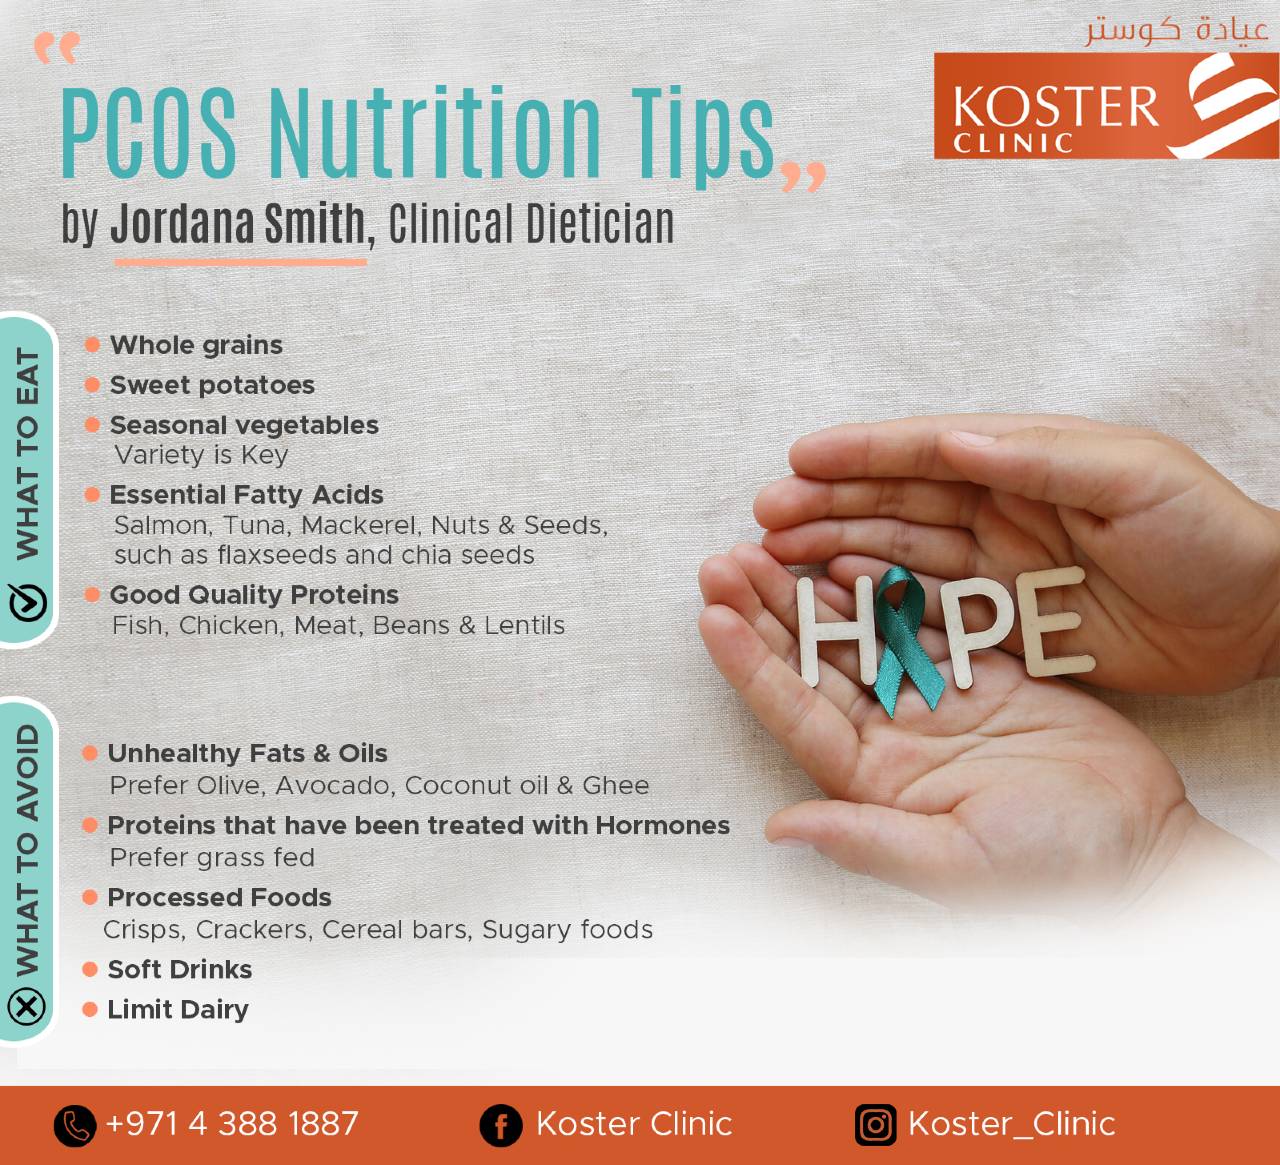 PCOS Nutrition Tips by Jordana Smith